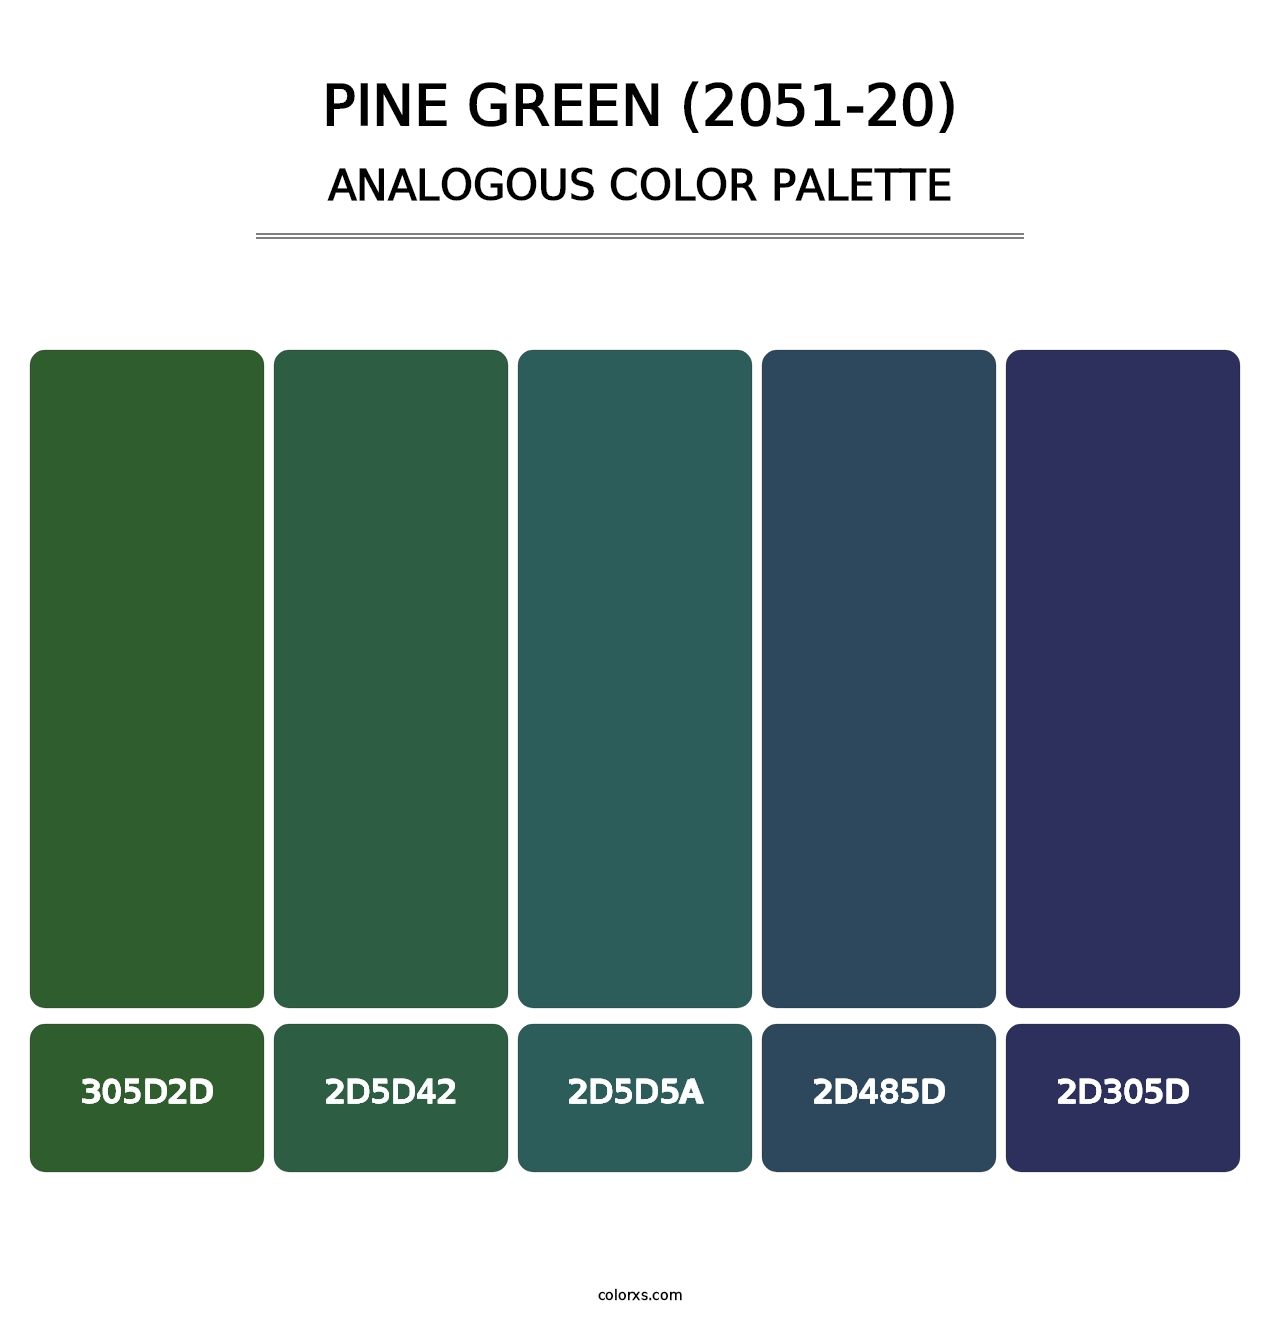 Pine Green (2051-20) - Analogous Color Palette